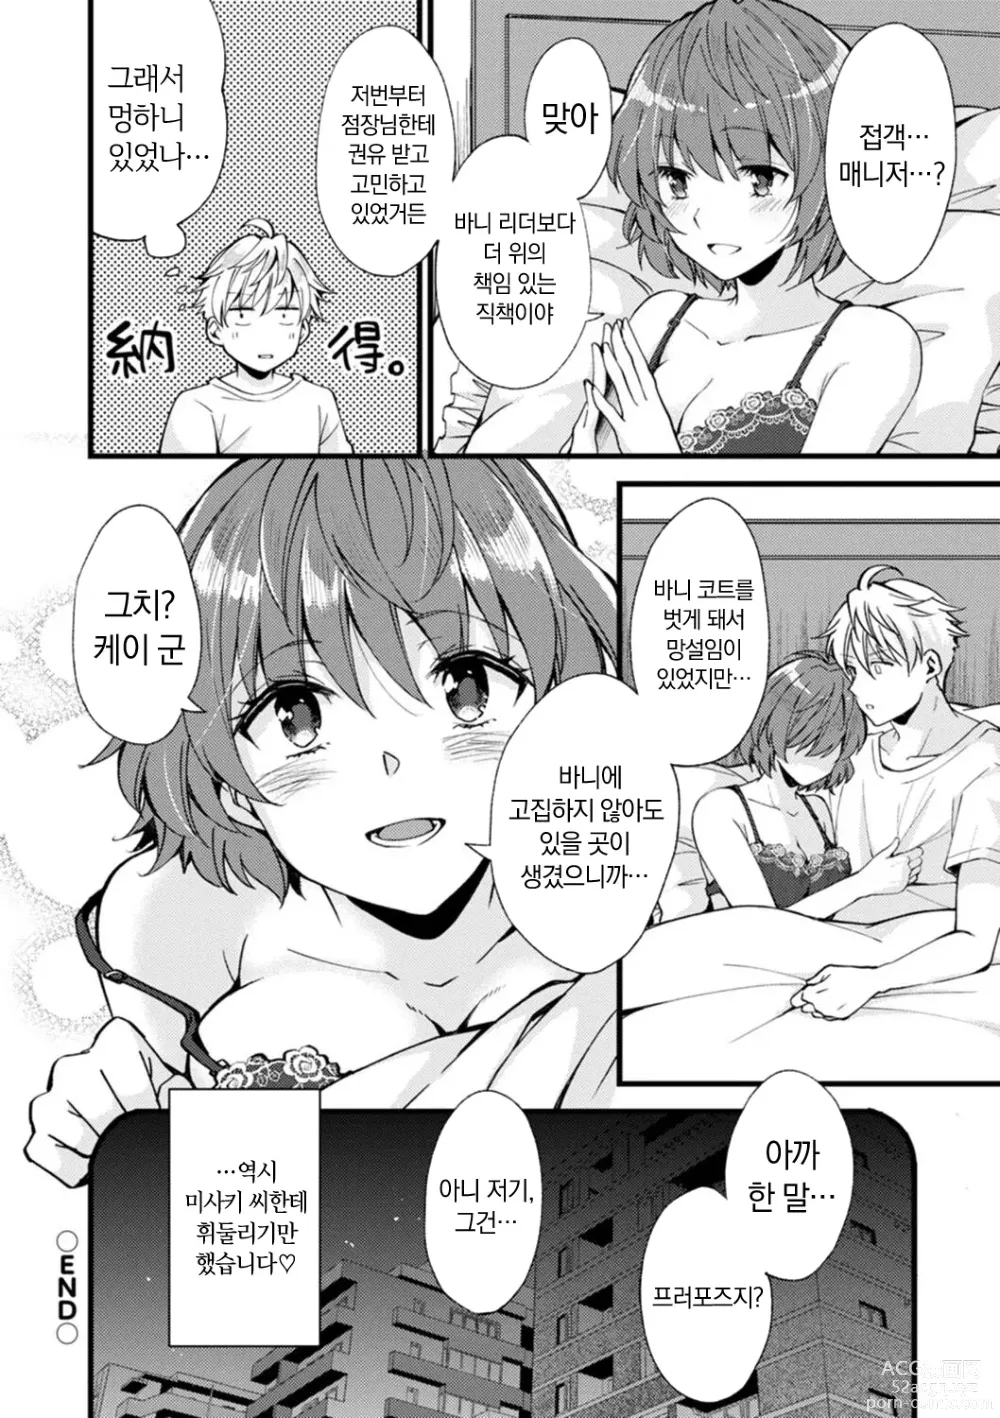 Page 170 of manga 취미가 바니걸이라니 정말이에요?